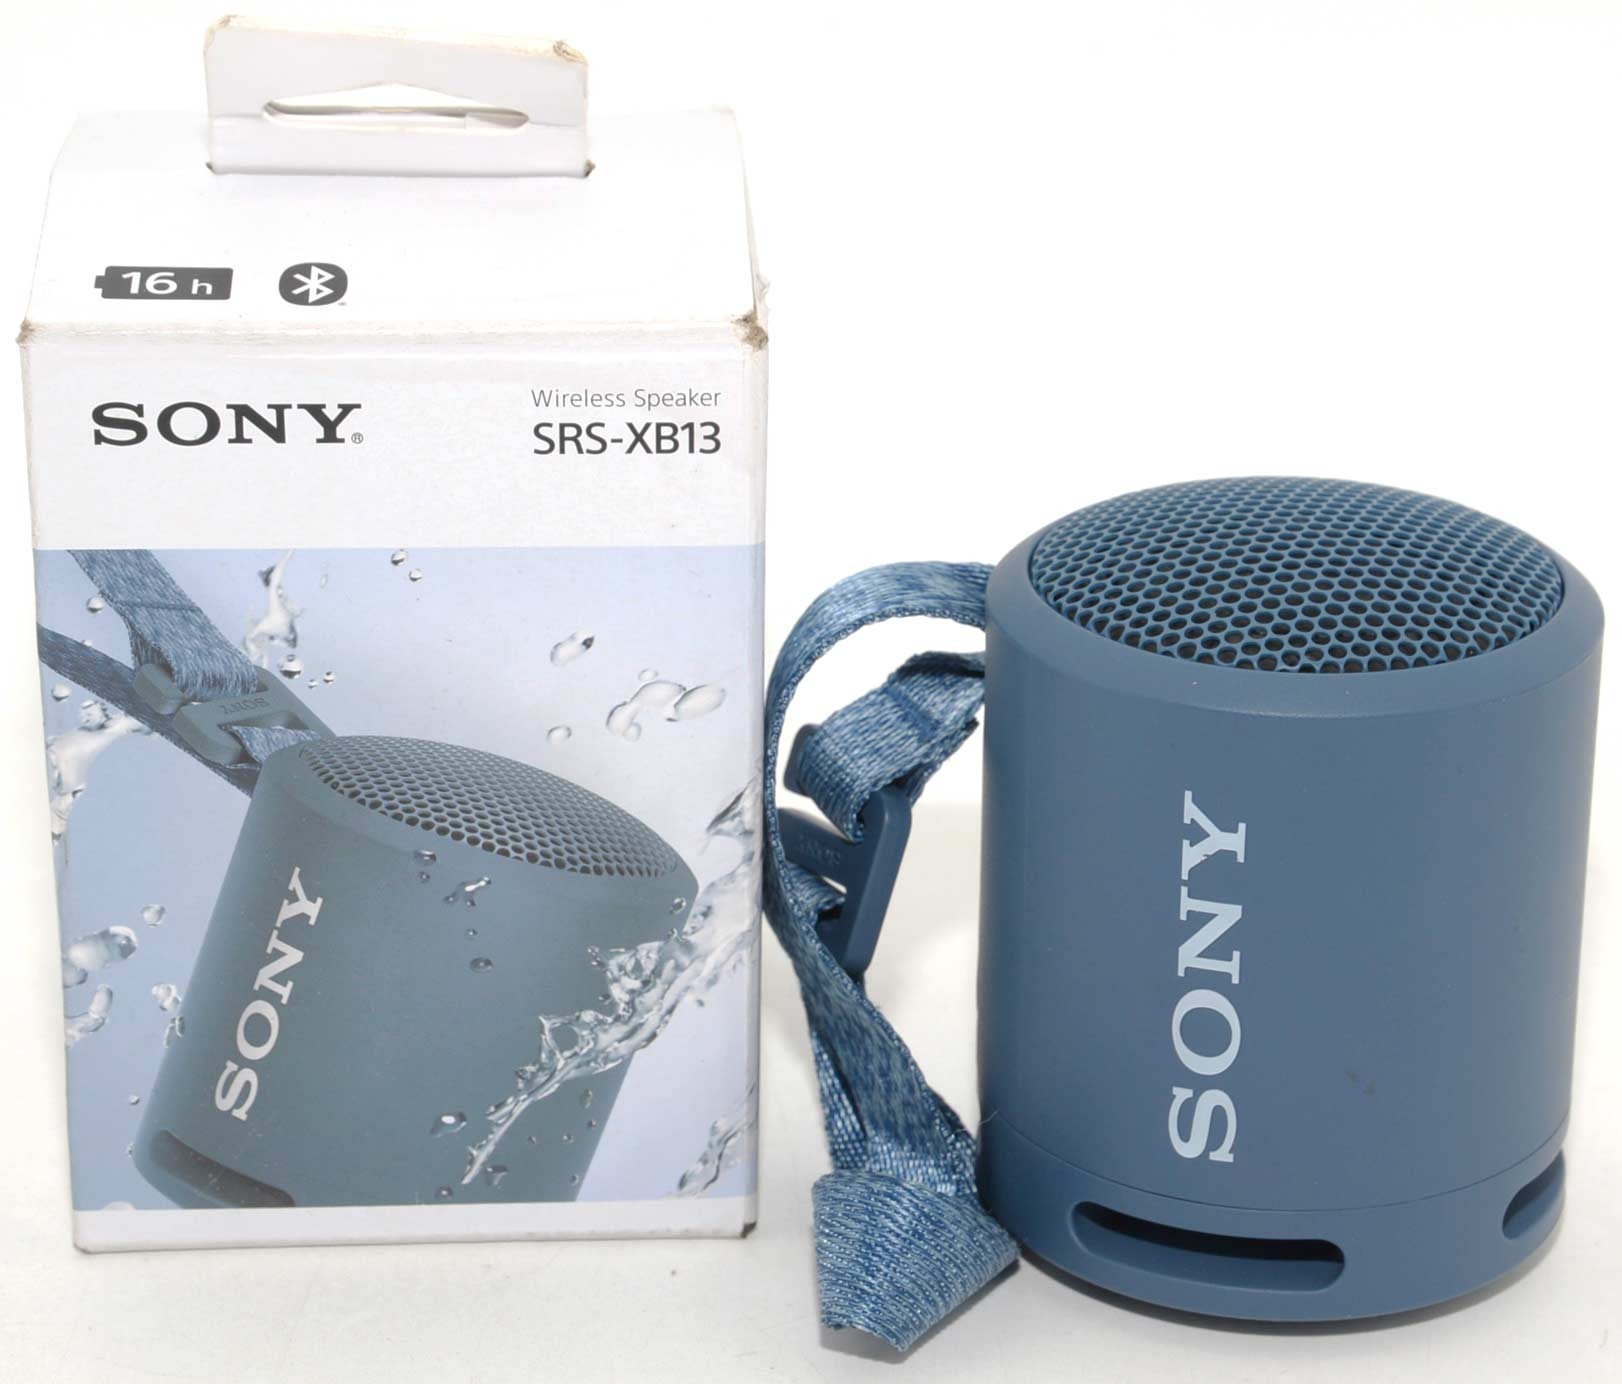 Altavoz portátil Sony SRS-XB13 - Nueva versión 2021 - TV HiFi Pro